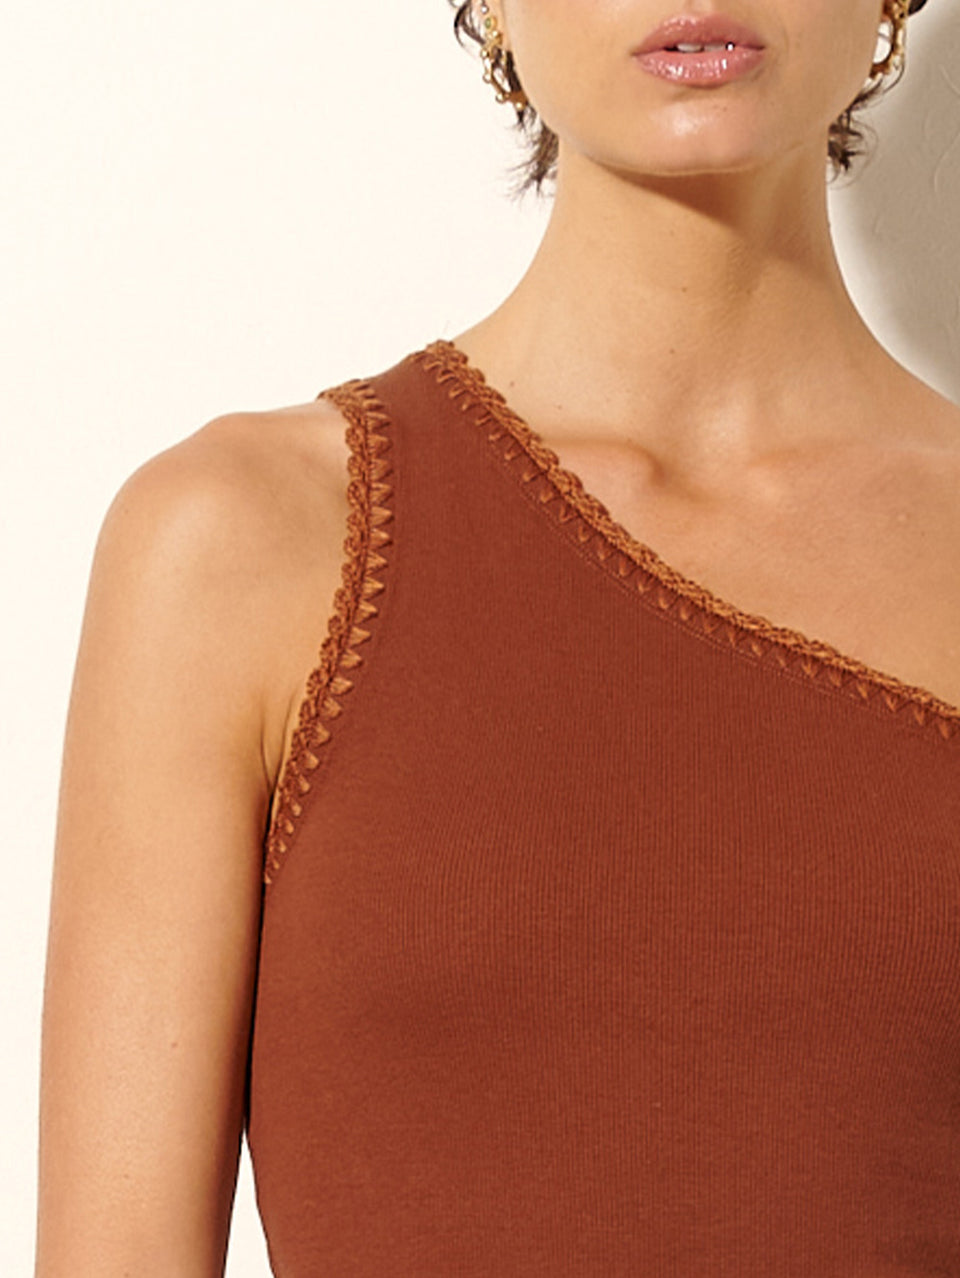 Tallulah One Shoulder Coffee KIVARI | Model wears brown one shoulder top detail shot